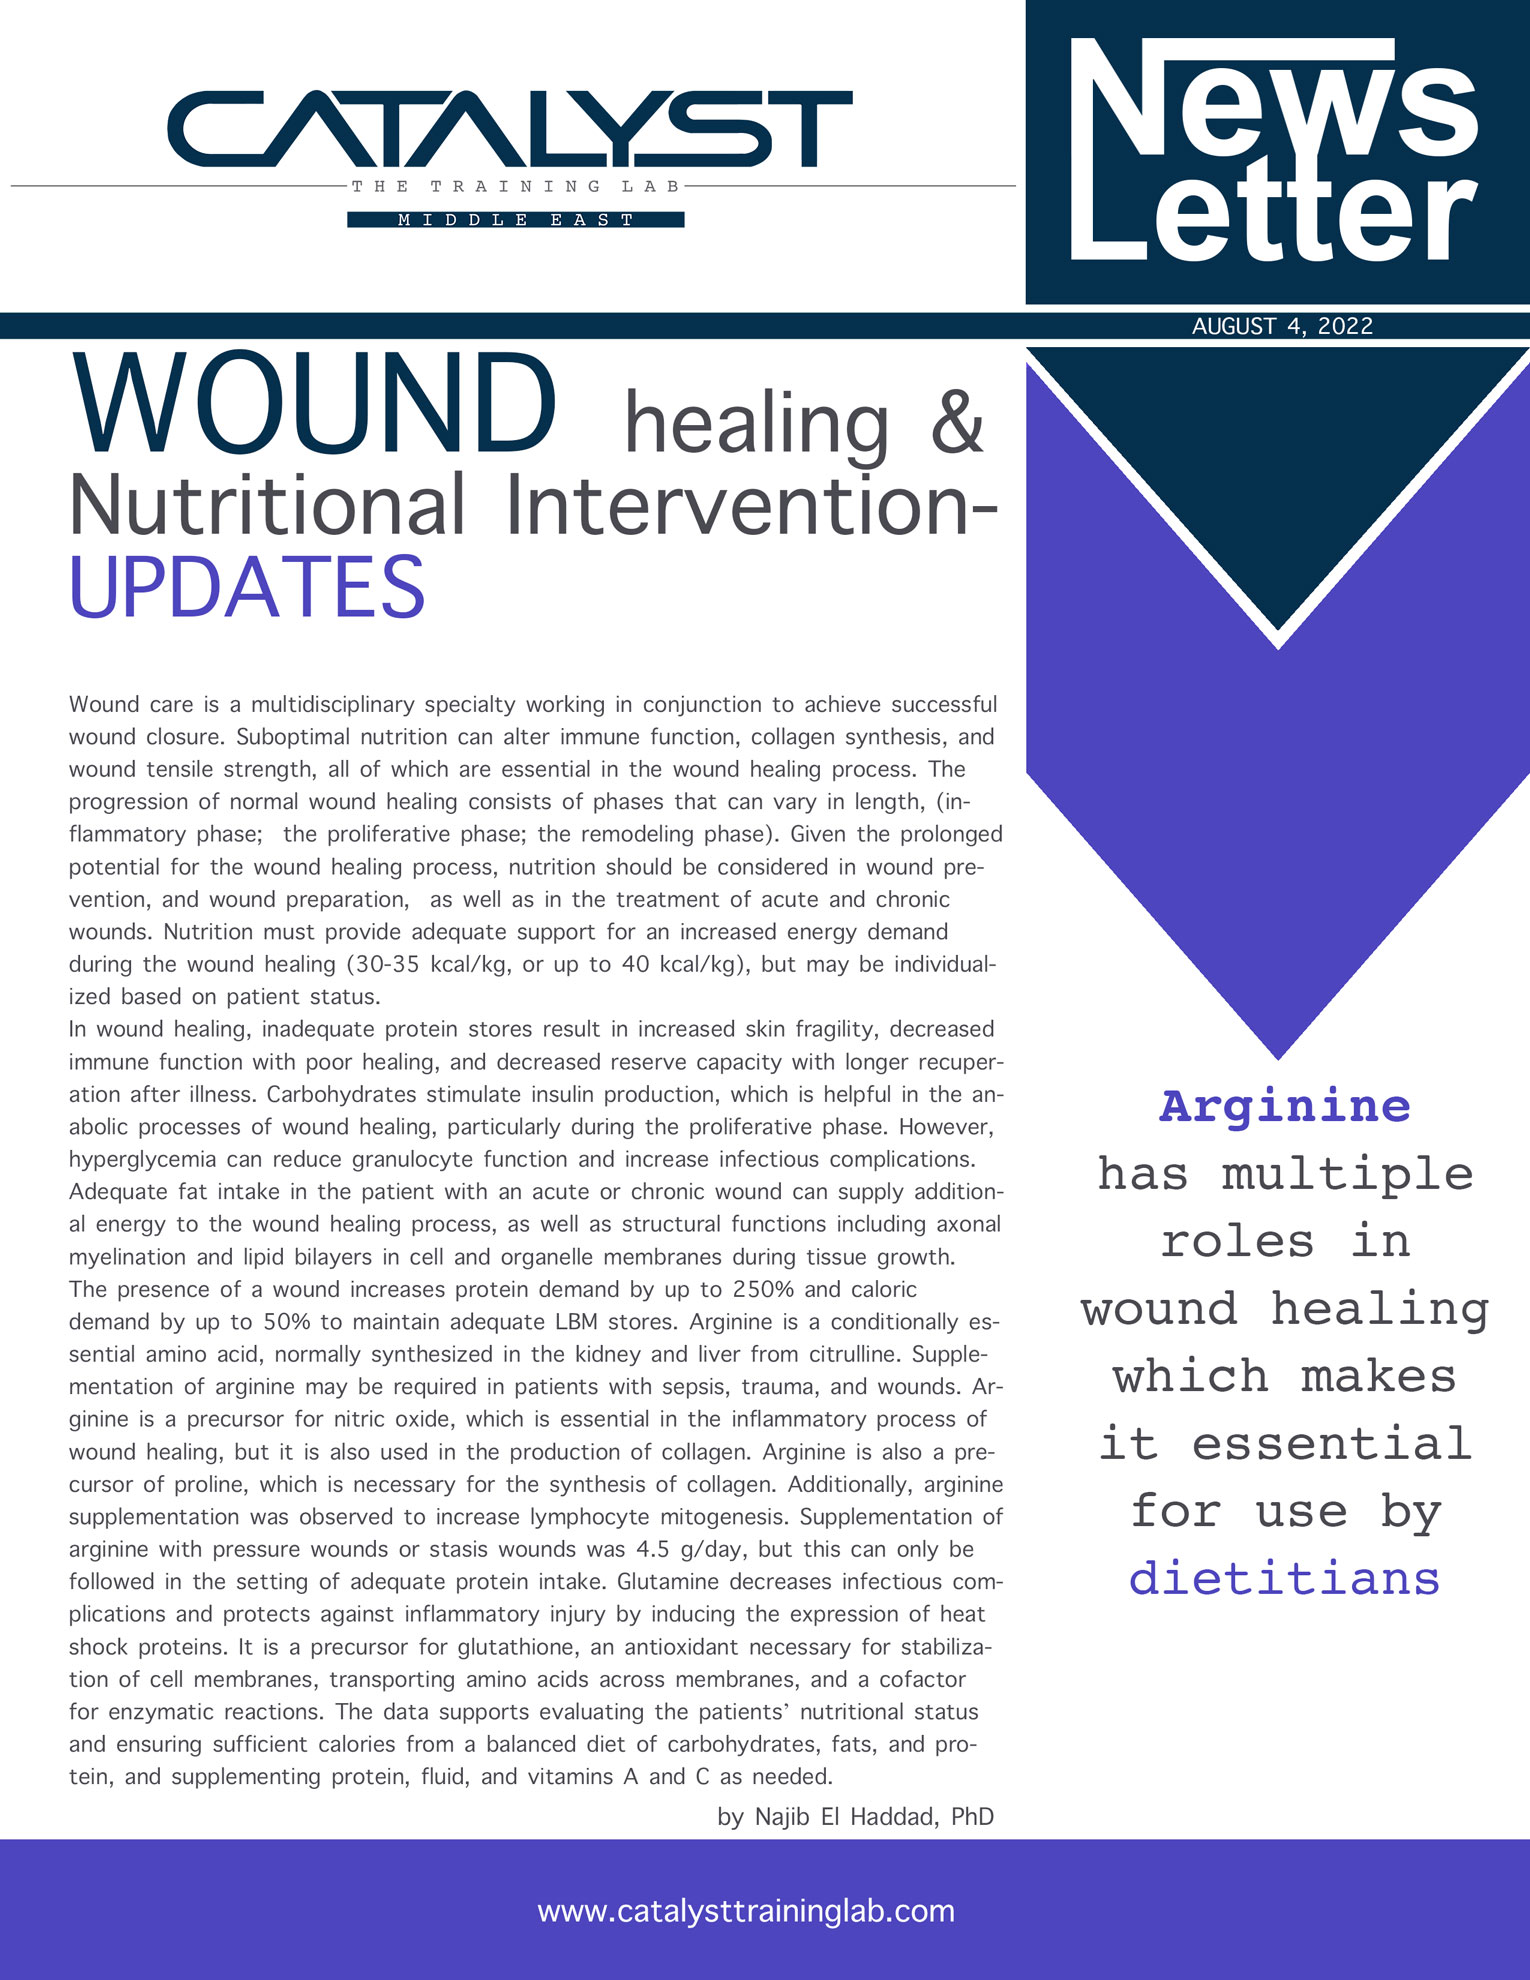 Wound Healing & Nutrition